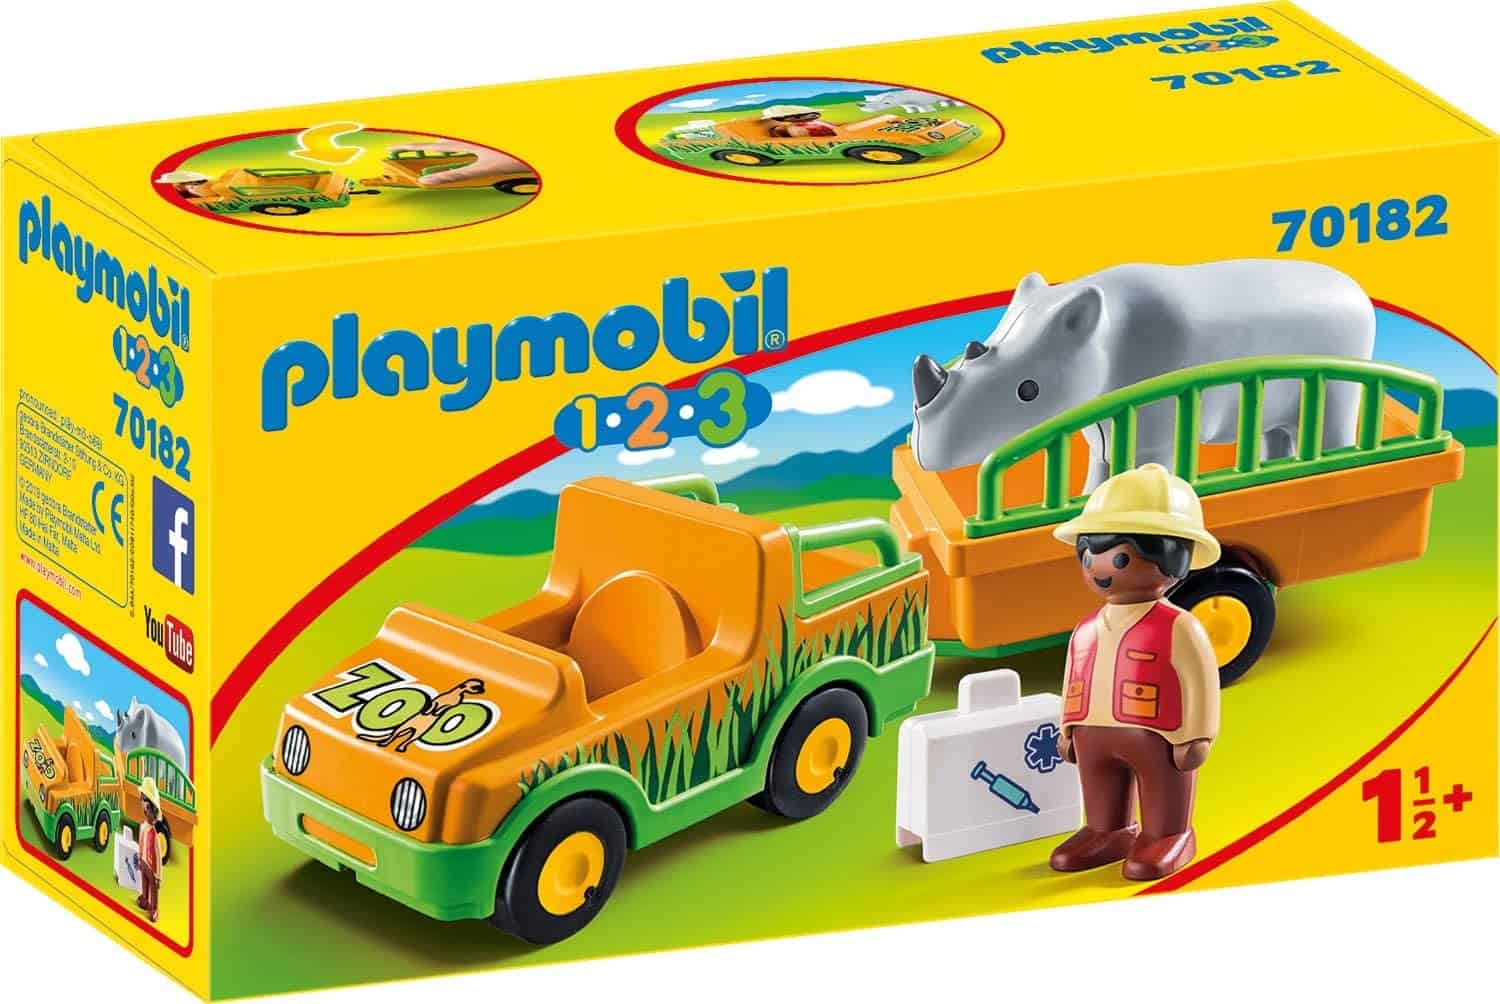 Veicolo Zoo con Rinoceronte Playmobil 12..3 70182